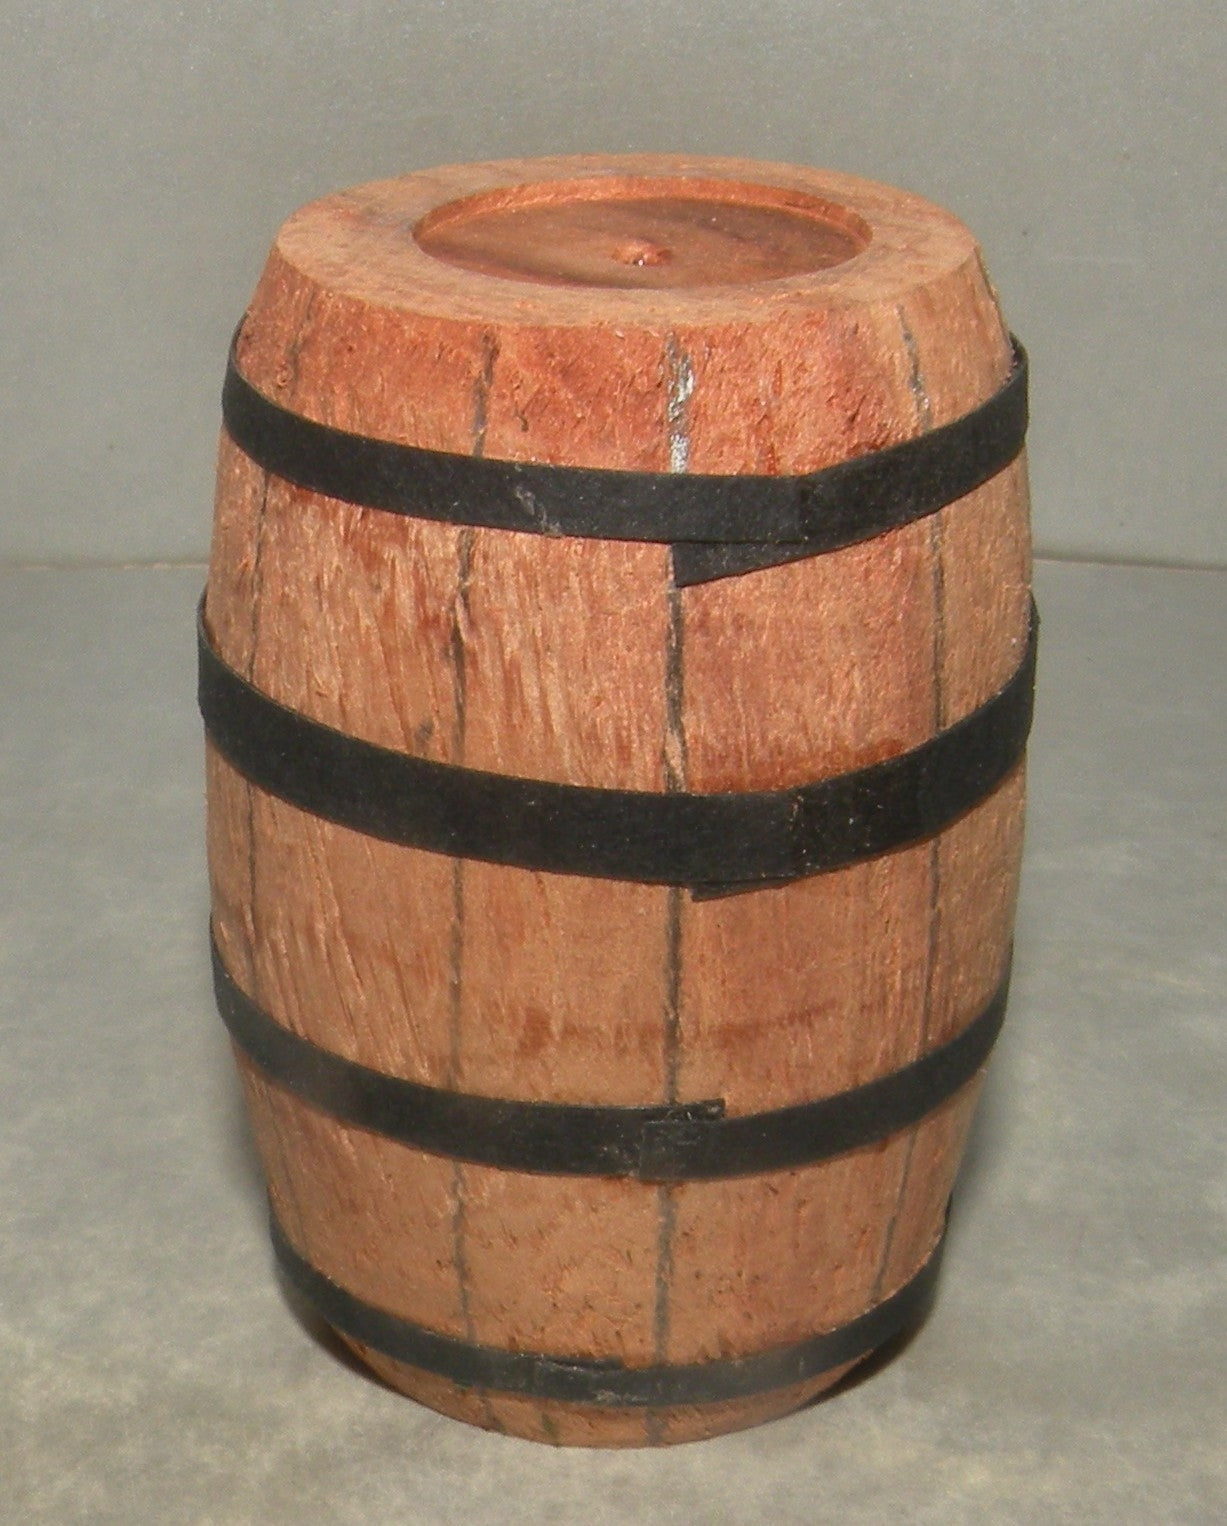 Wooden Barrel Didier 7 - 6 Cm